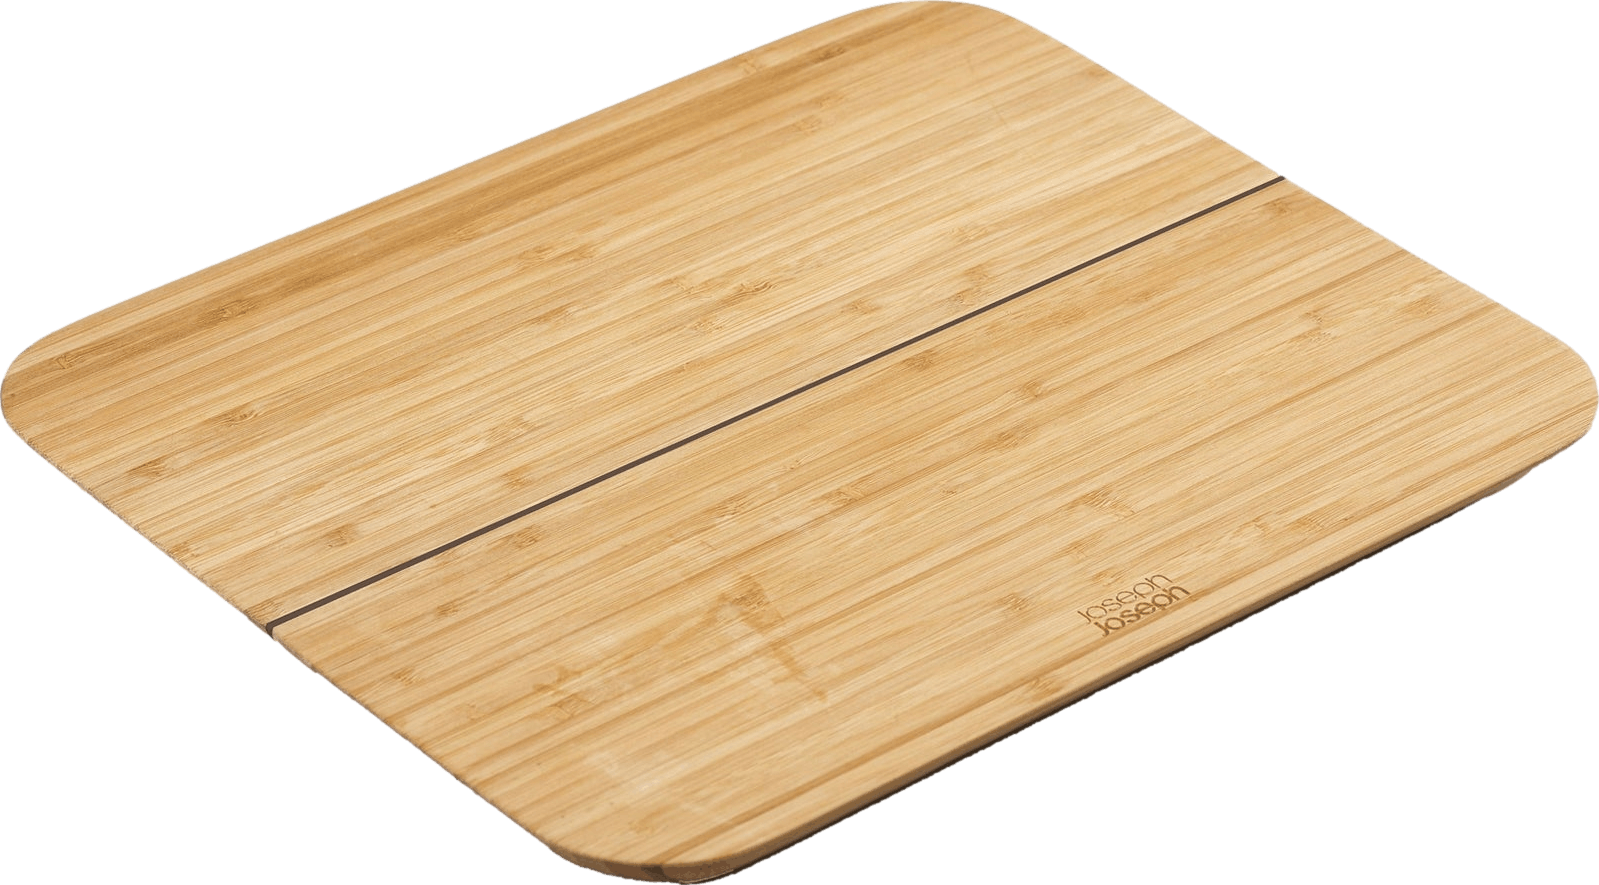 Joseph Joseph Chop2Pot Large Bamboo Cutting Board